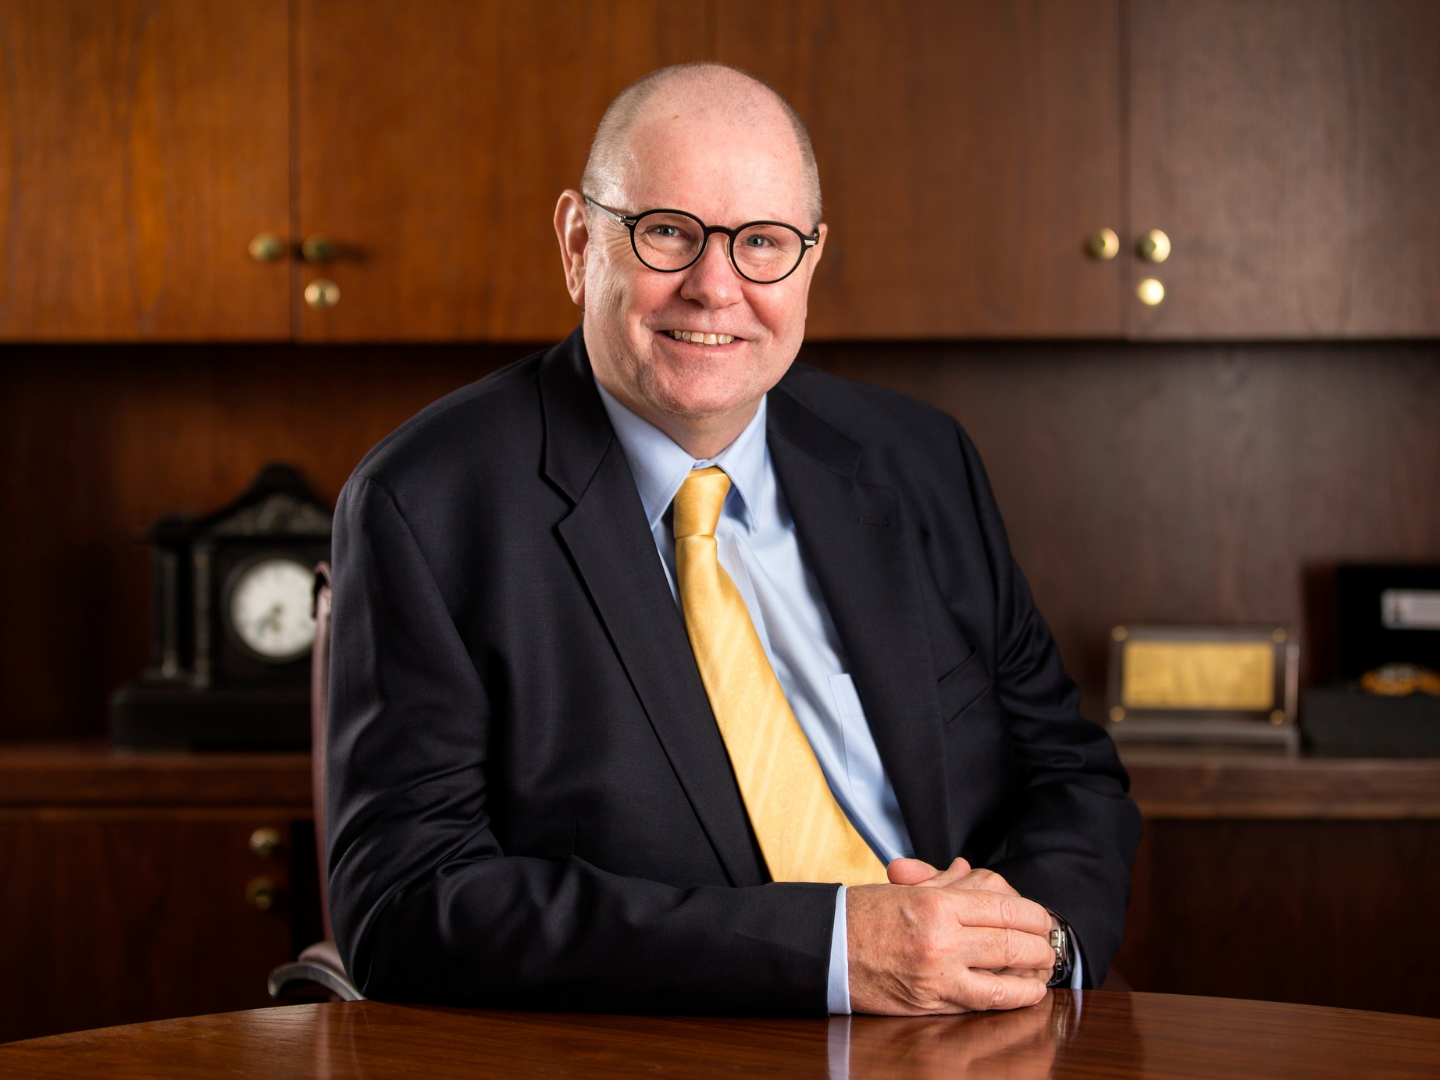 Perth Mint CEO, Richard Hayes